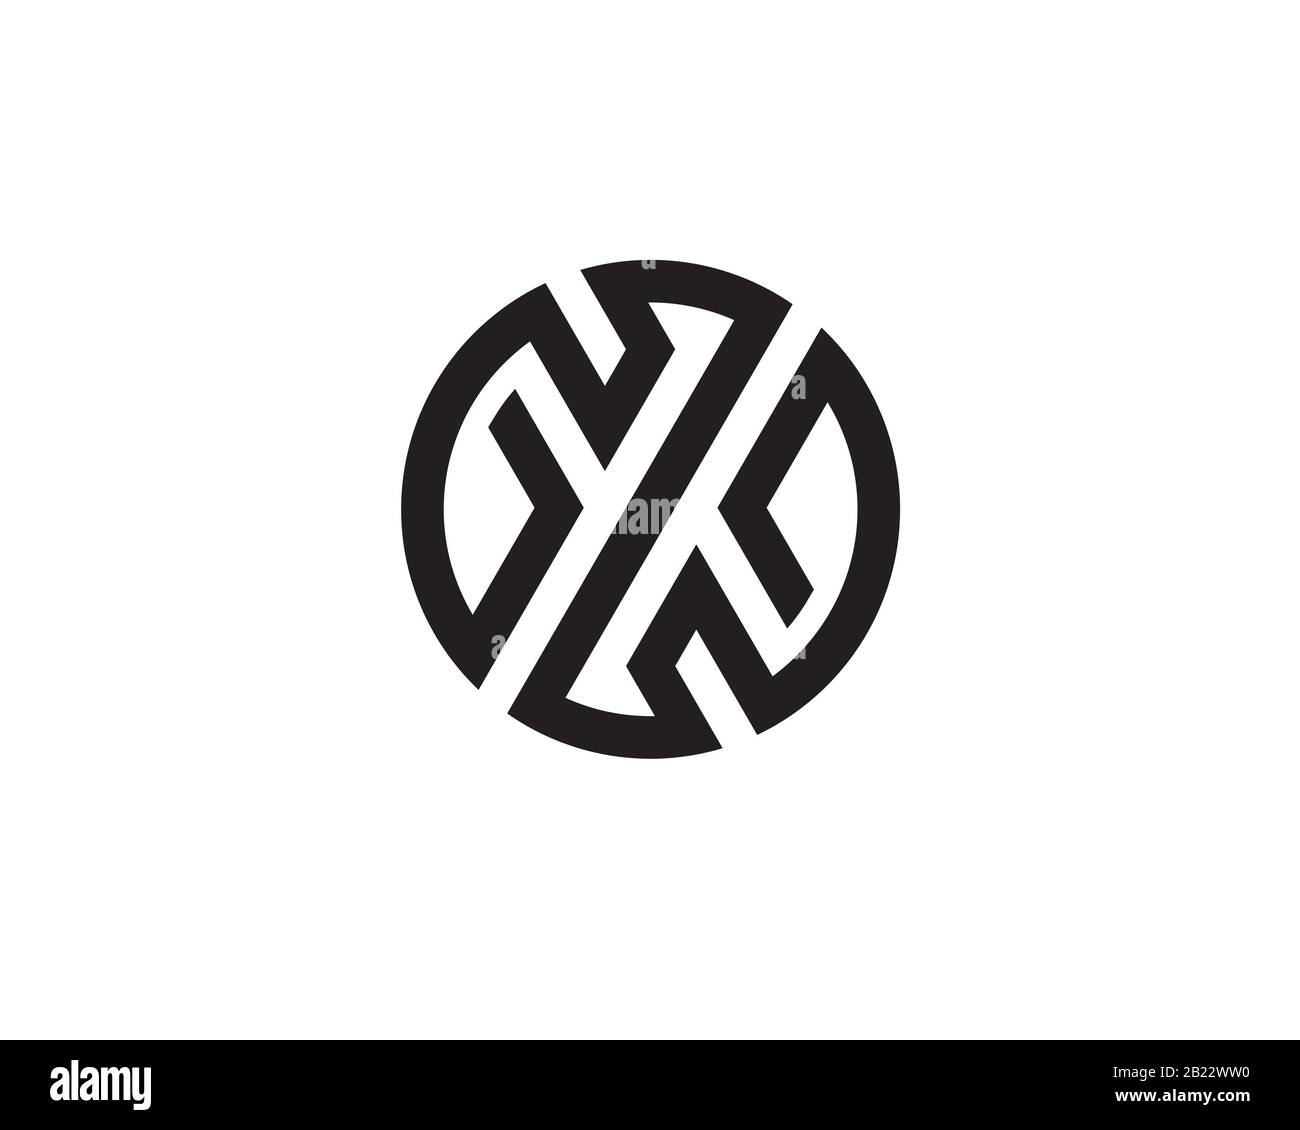 circular round emblem monogram anagram monoline lettermark logo of letter x o y z 0 Stock Vector